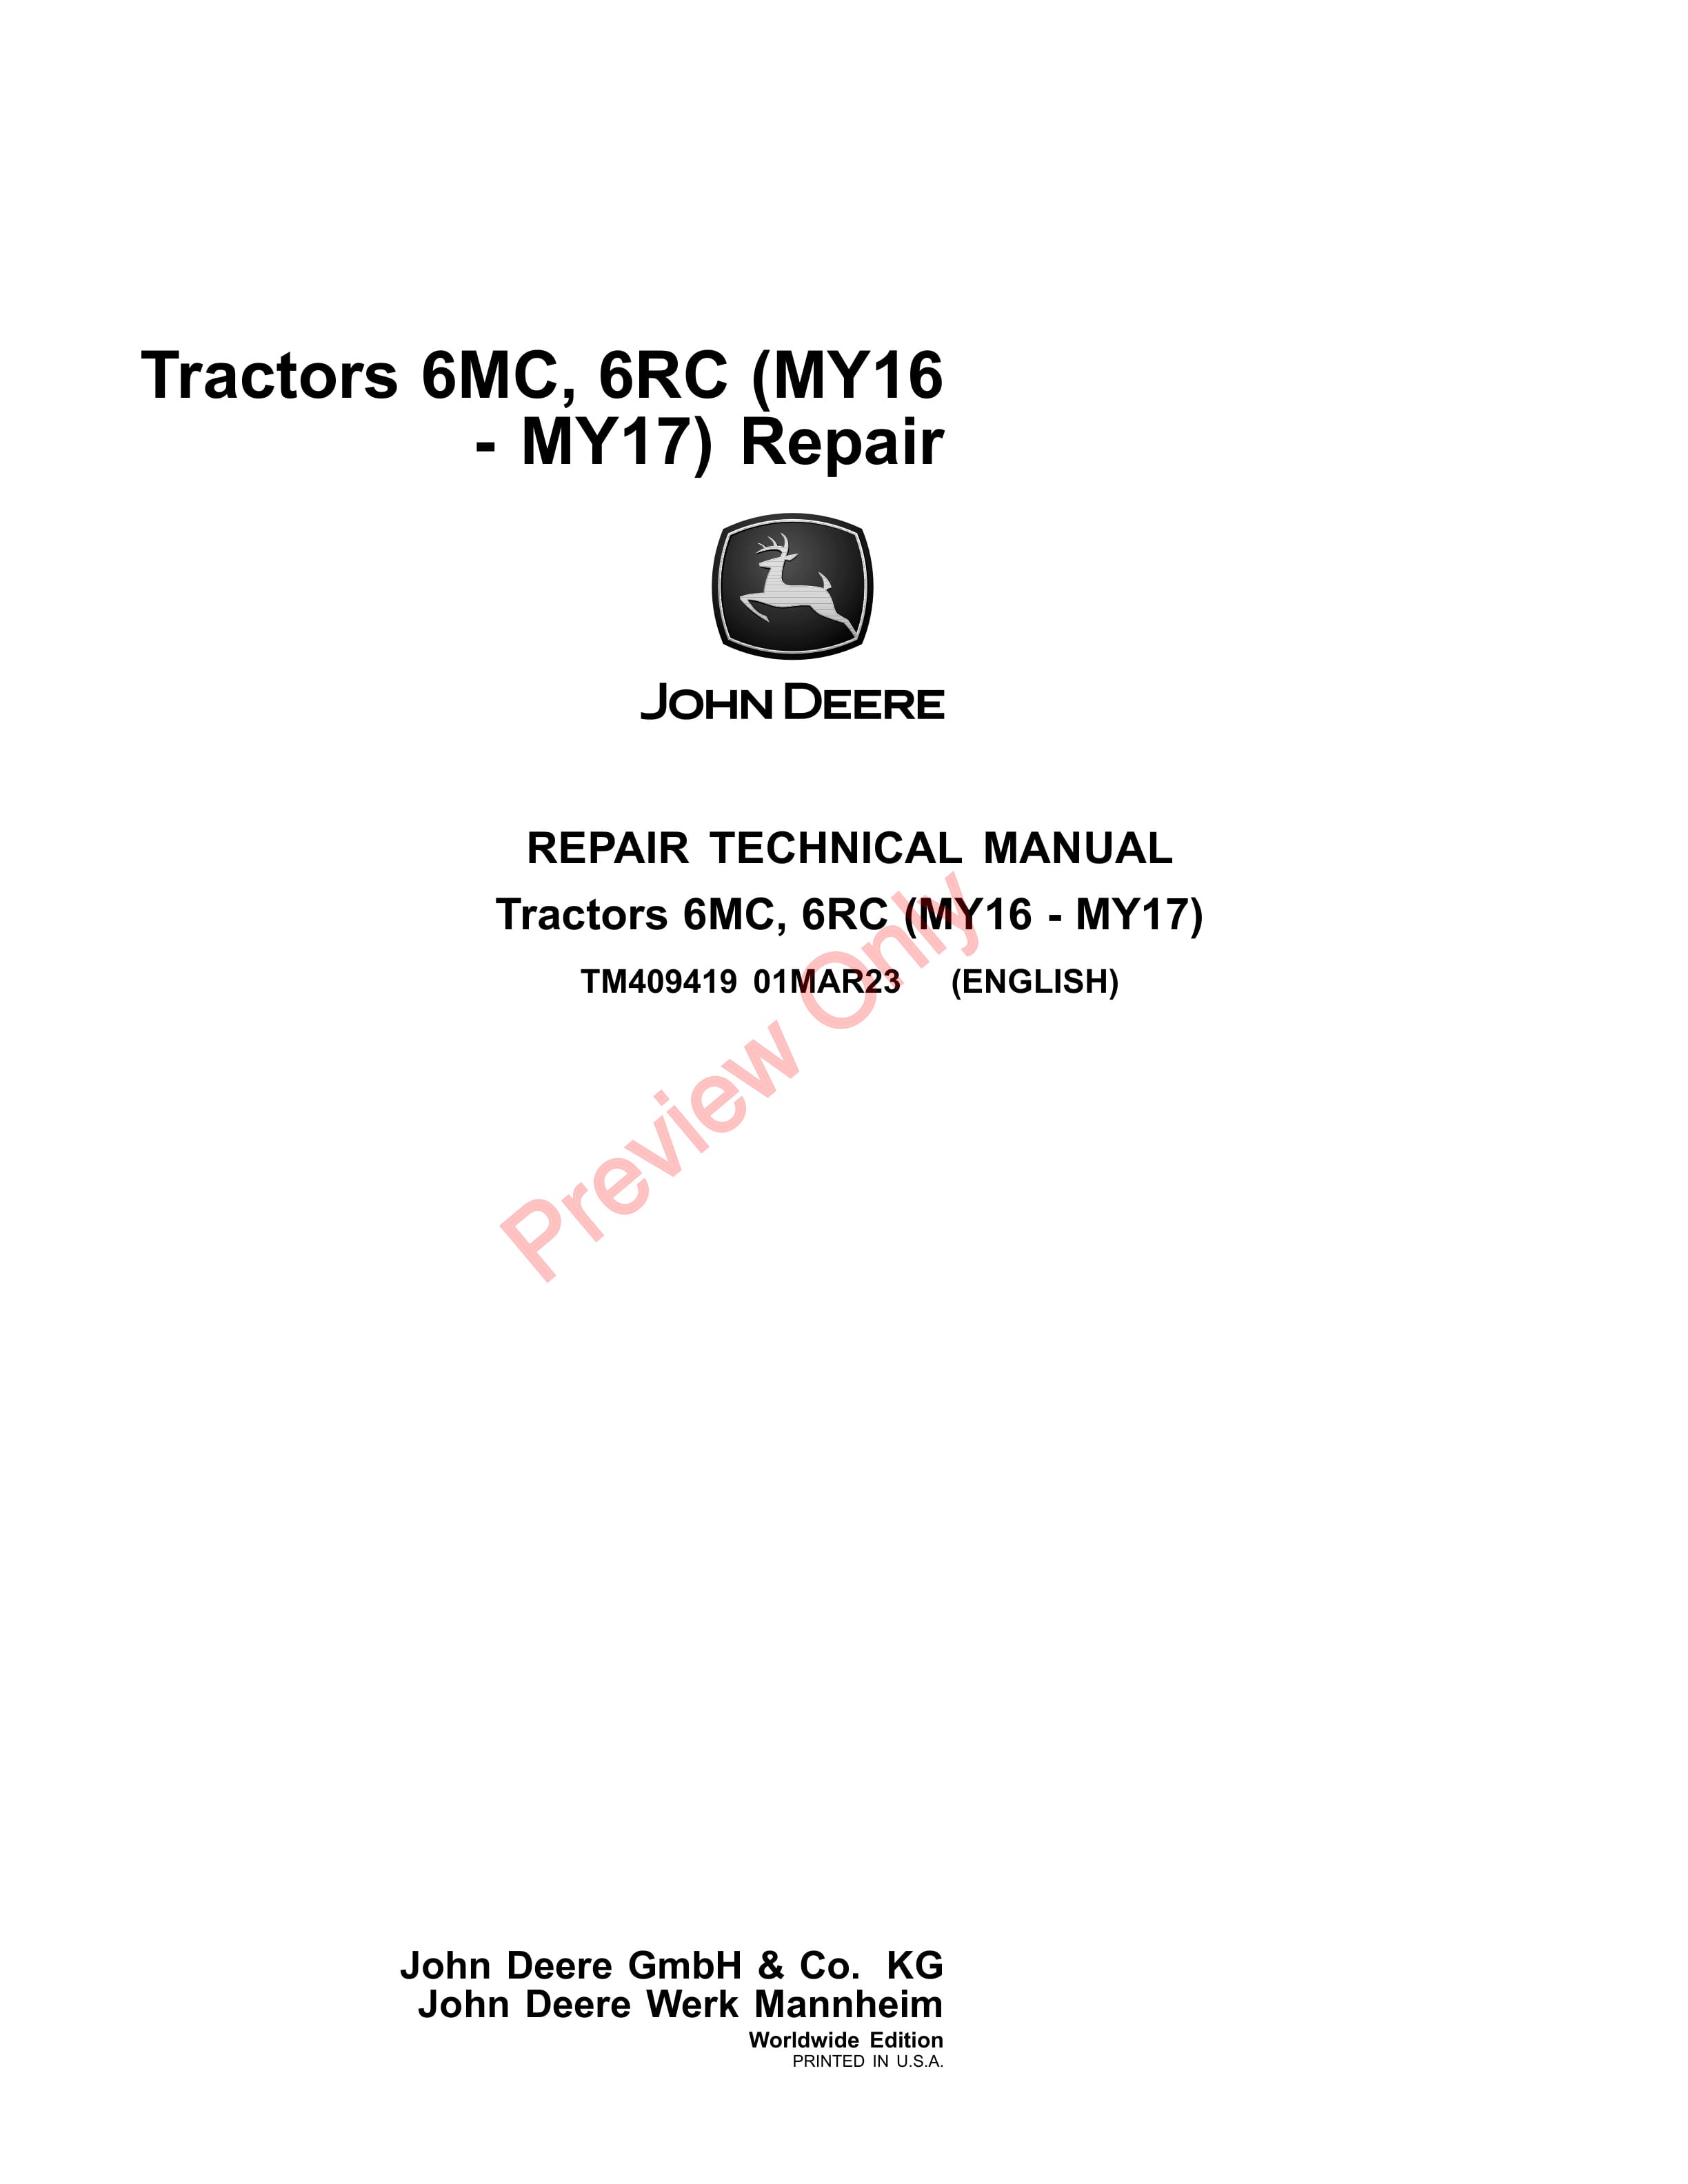 John Deere 6095MC 6105MC 6115MC 6095RC 6105RC and 6115RC Tractors Repair Technical Manual TM409419 01MAR23 1